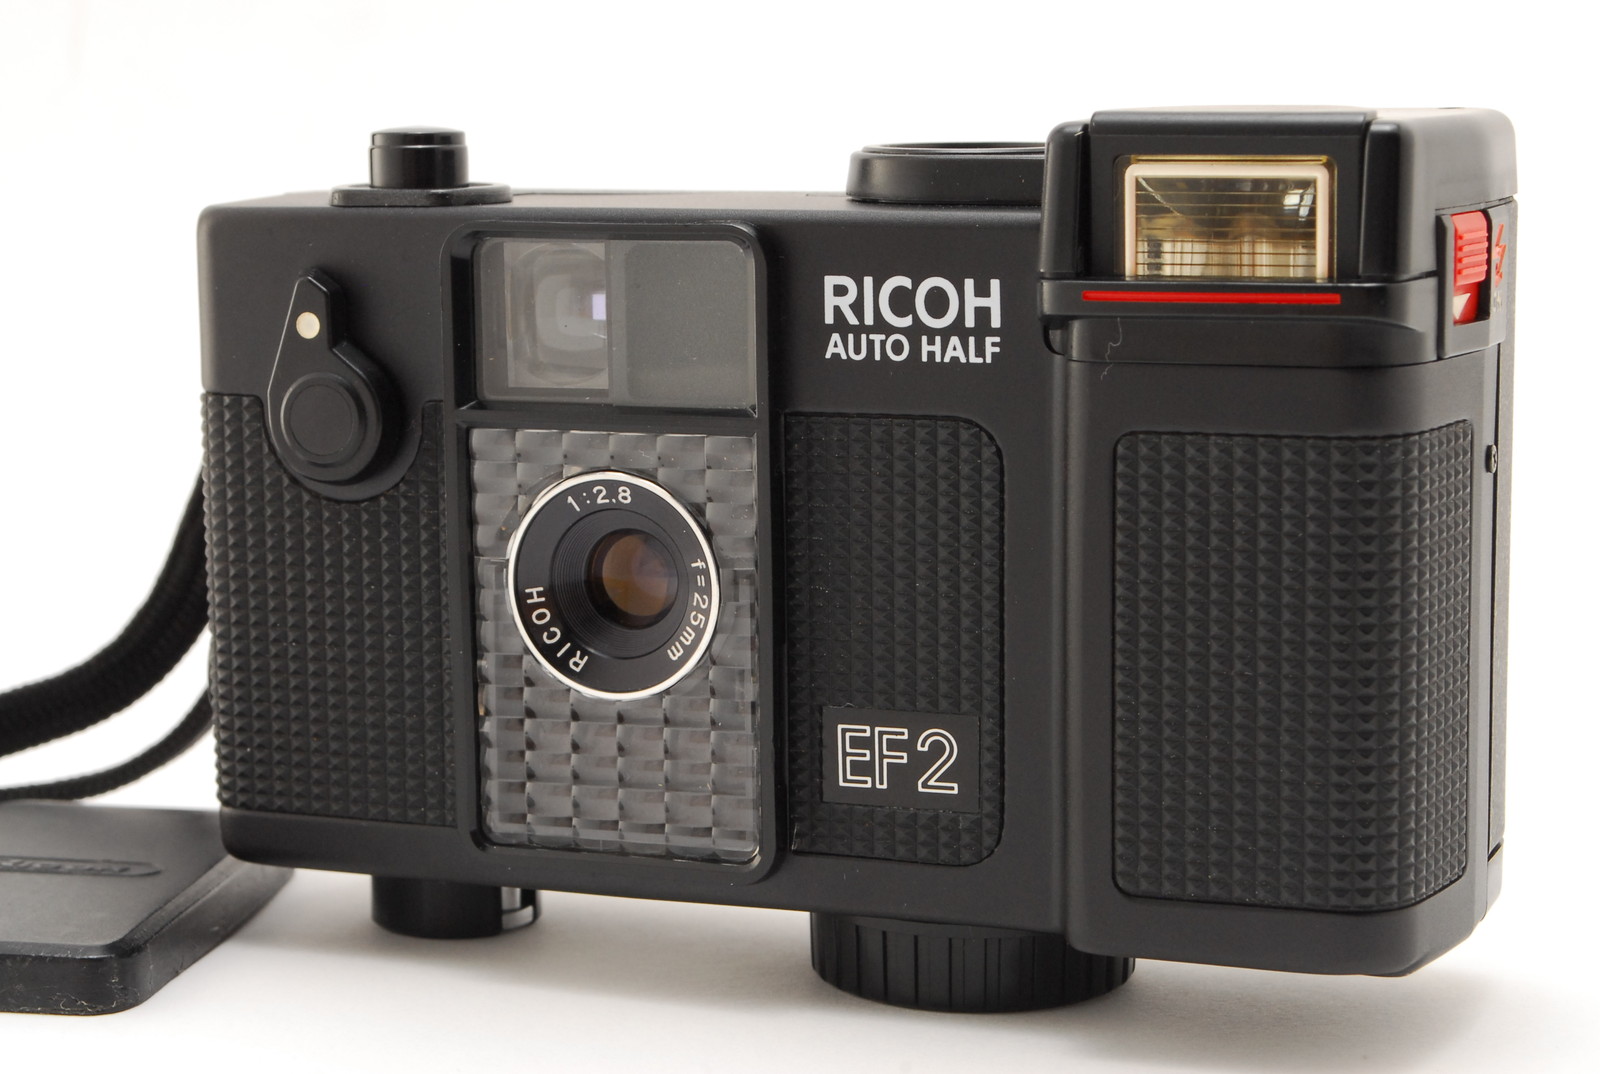 PROMOTION. NEAR MINT Ricoh AUTO HALF EF2, Lens Cap Flash WORKS Half Frame Camera from Japan